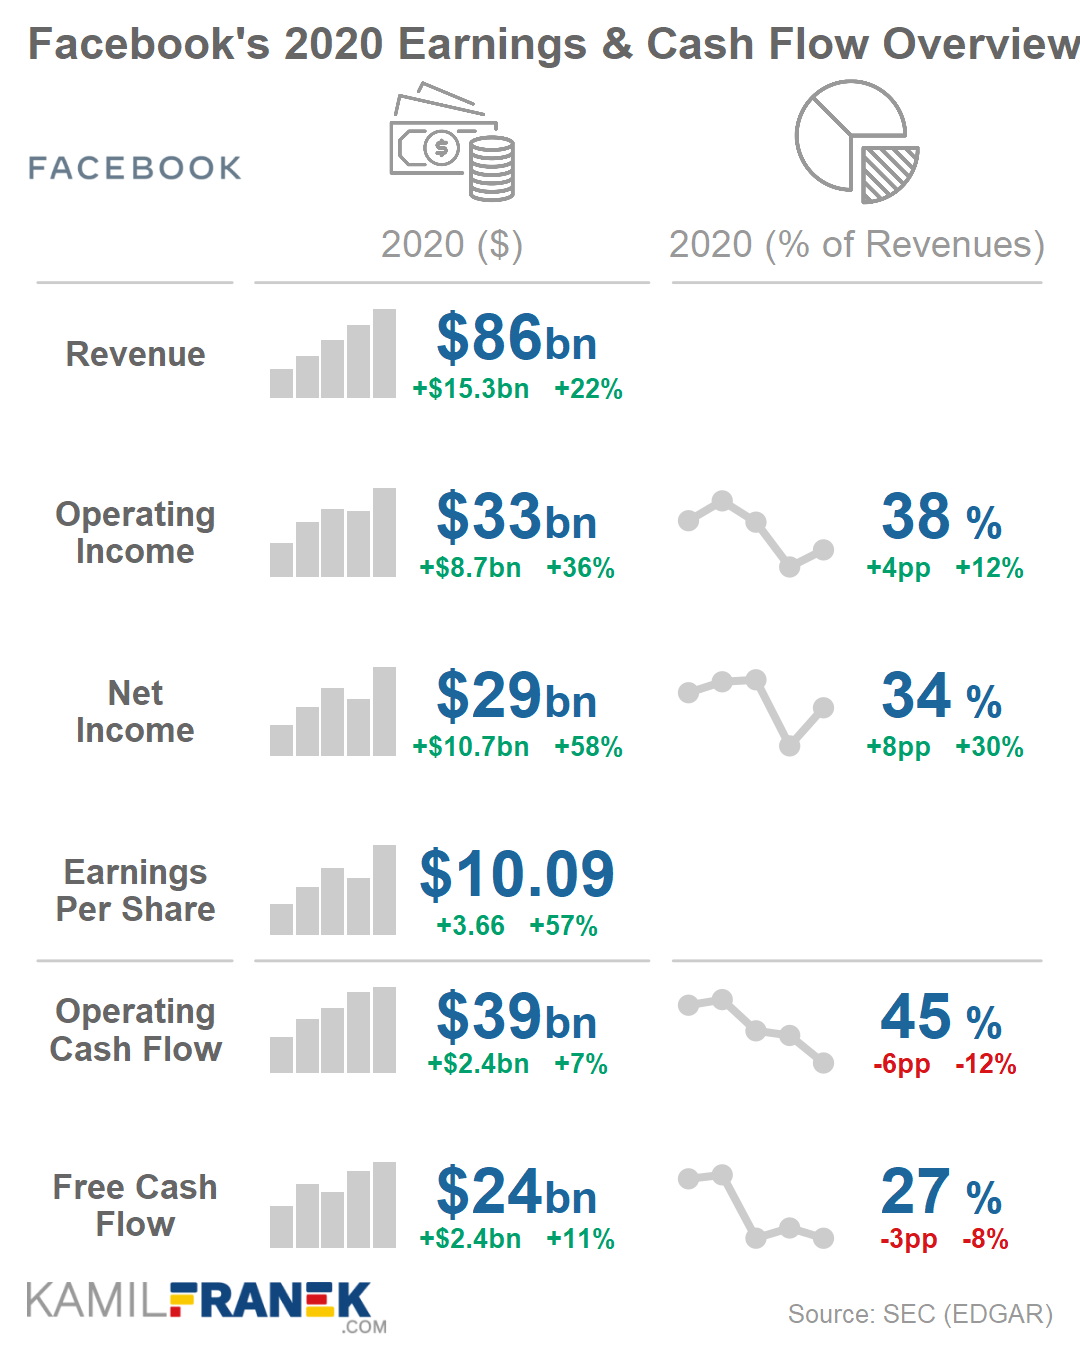 Facebook Financial Statements Overview & Analysis 2020 KAMIL FRANEK